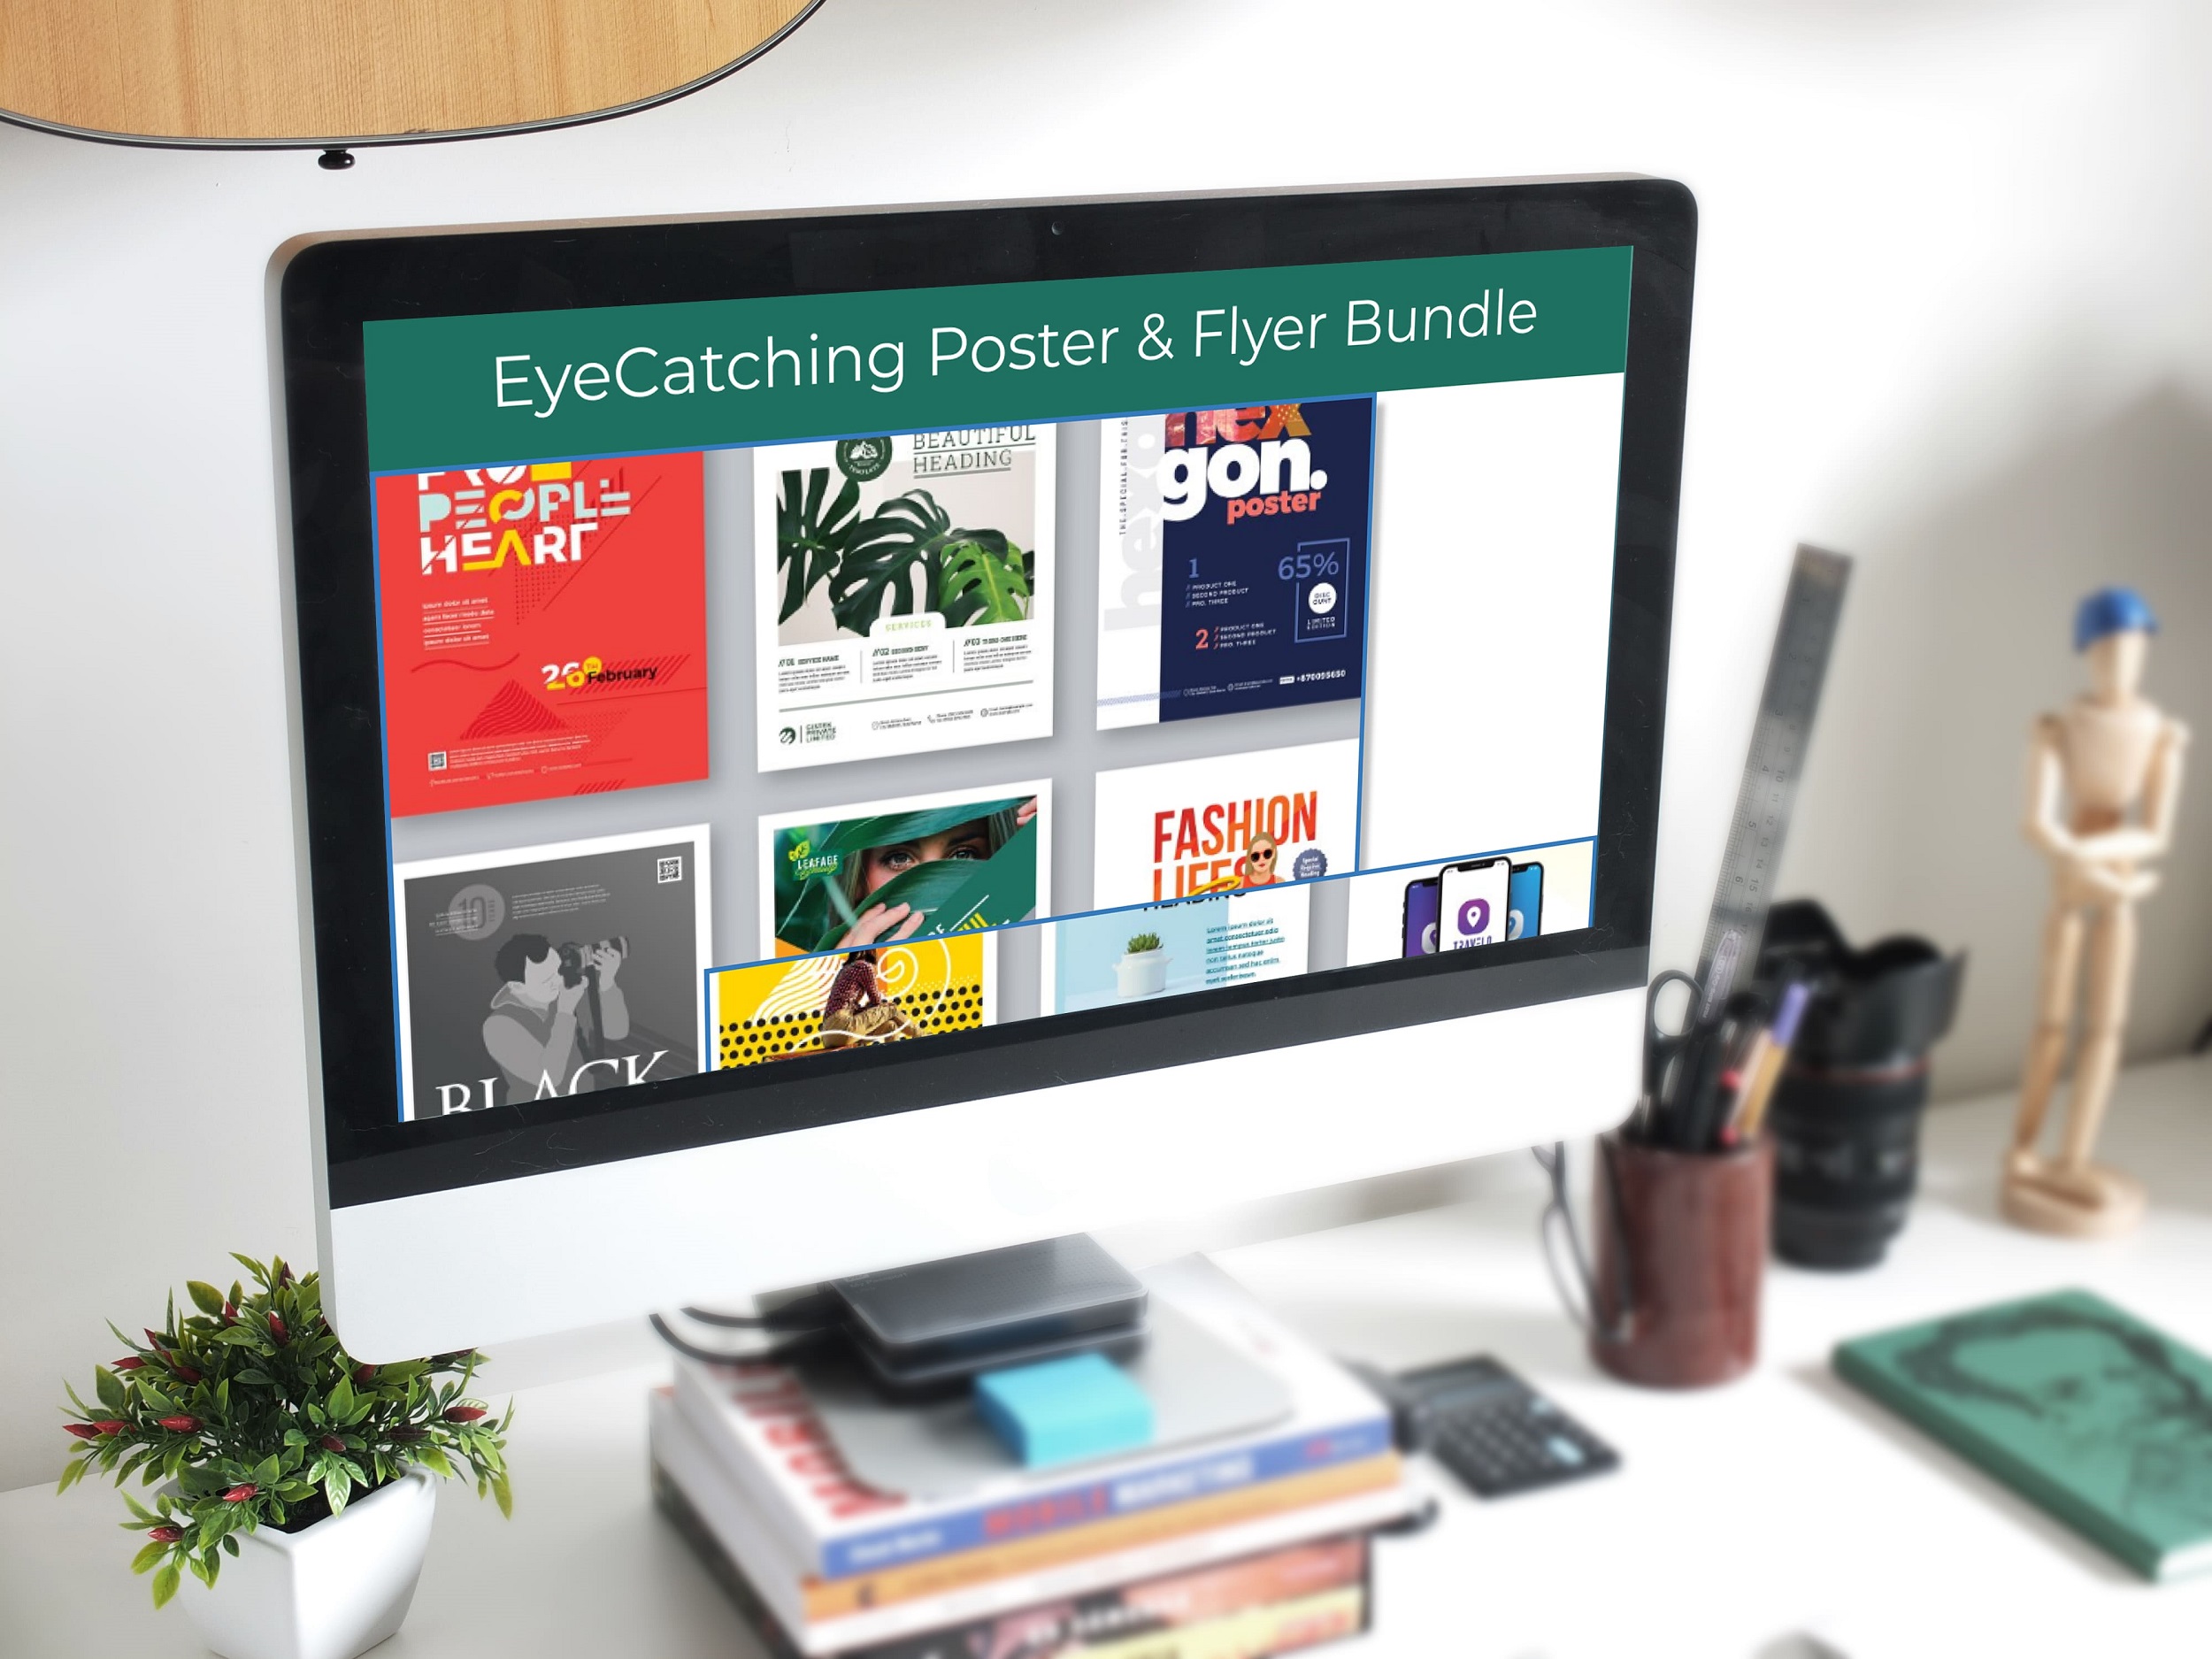 EyeCatching Poster Flyer Bundle desktop mockup.